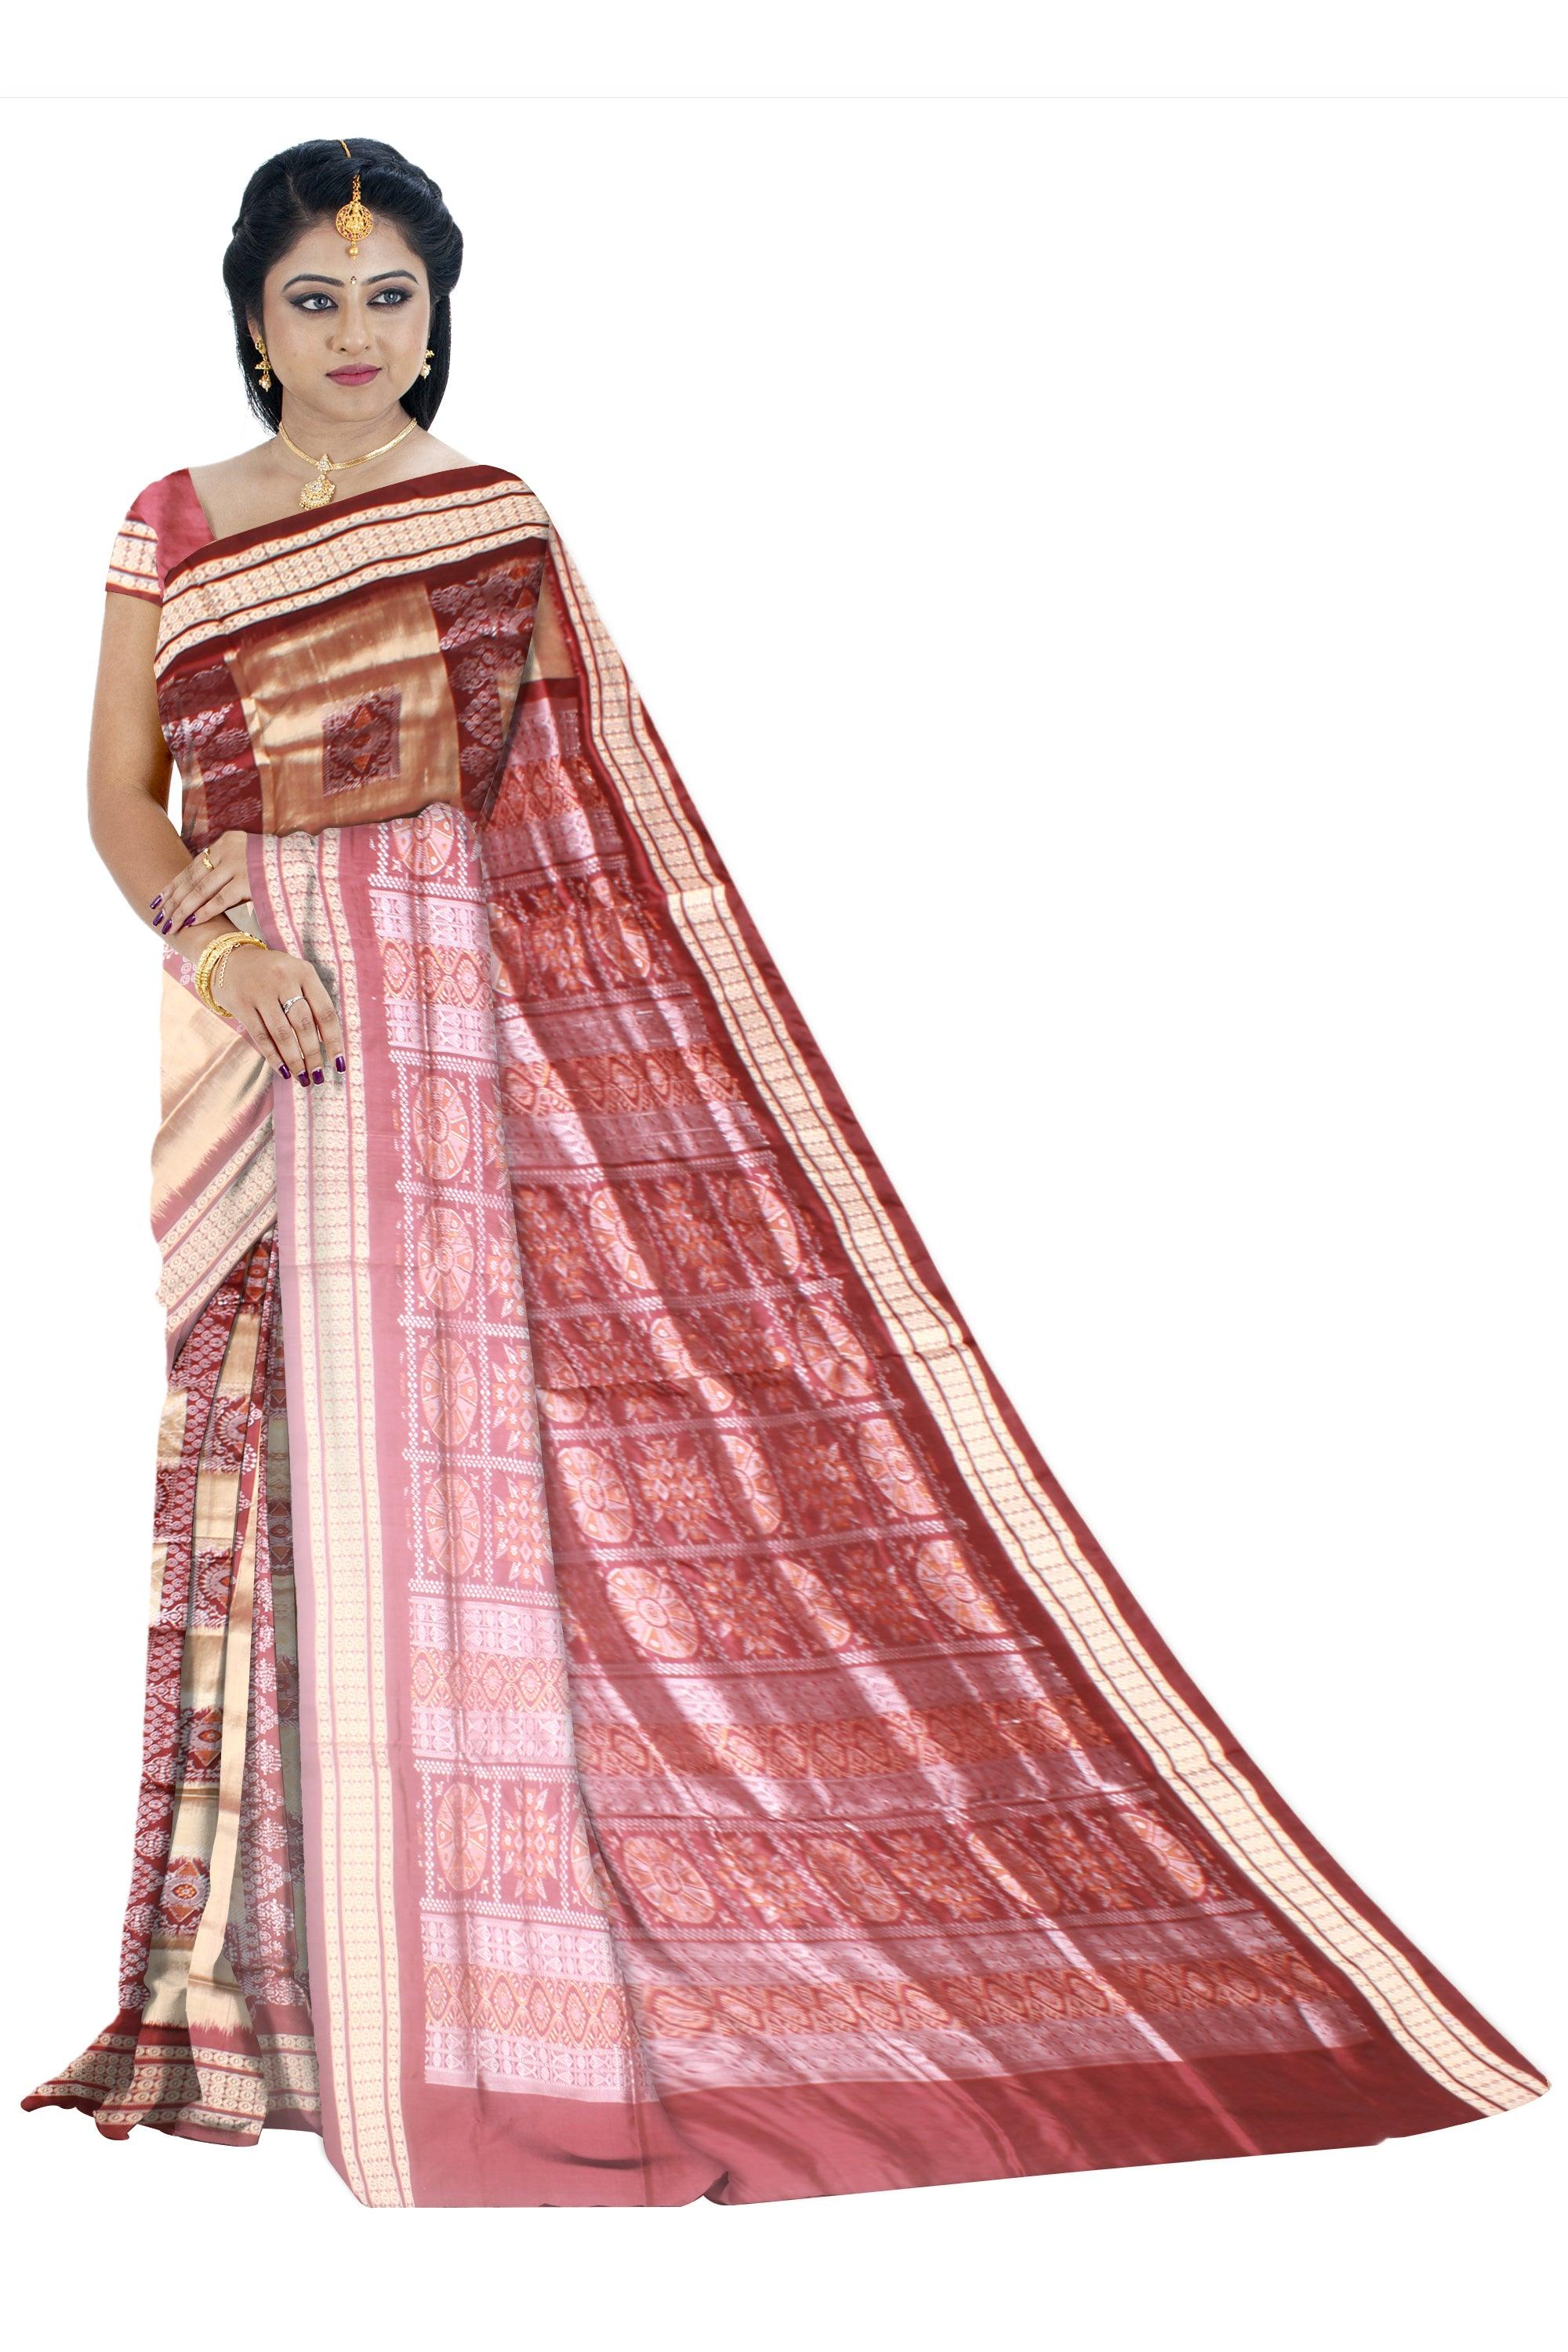 Sambalpuri Pata Saree in Gray and Maroon color pallu Pasapali Design with blouse piece. - Koshali Arts & Crafts Enterprise